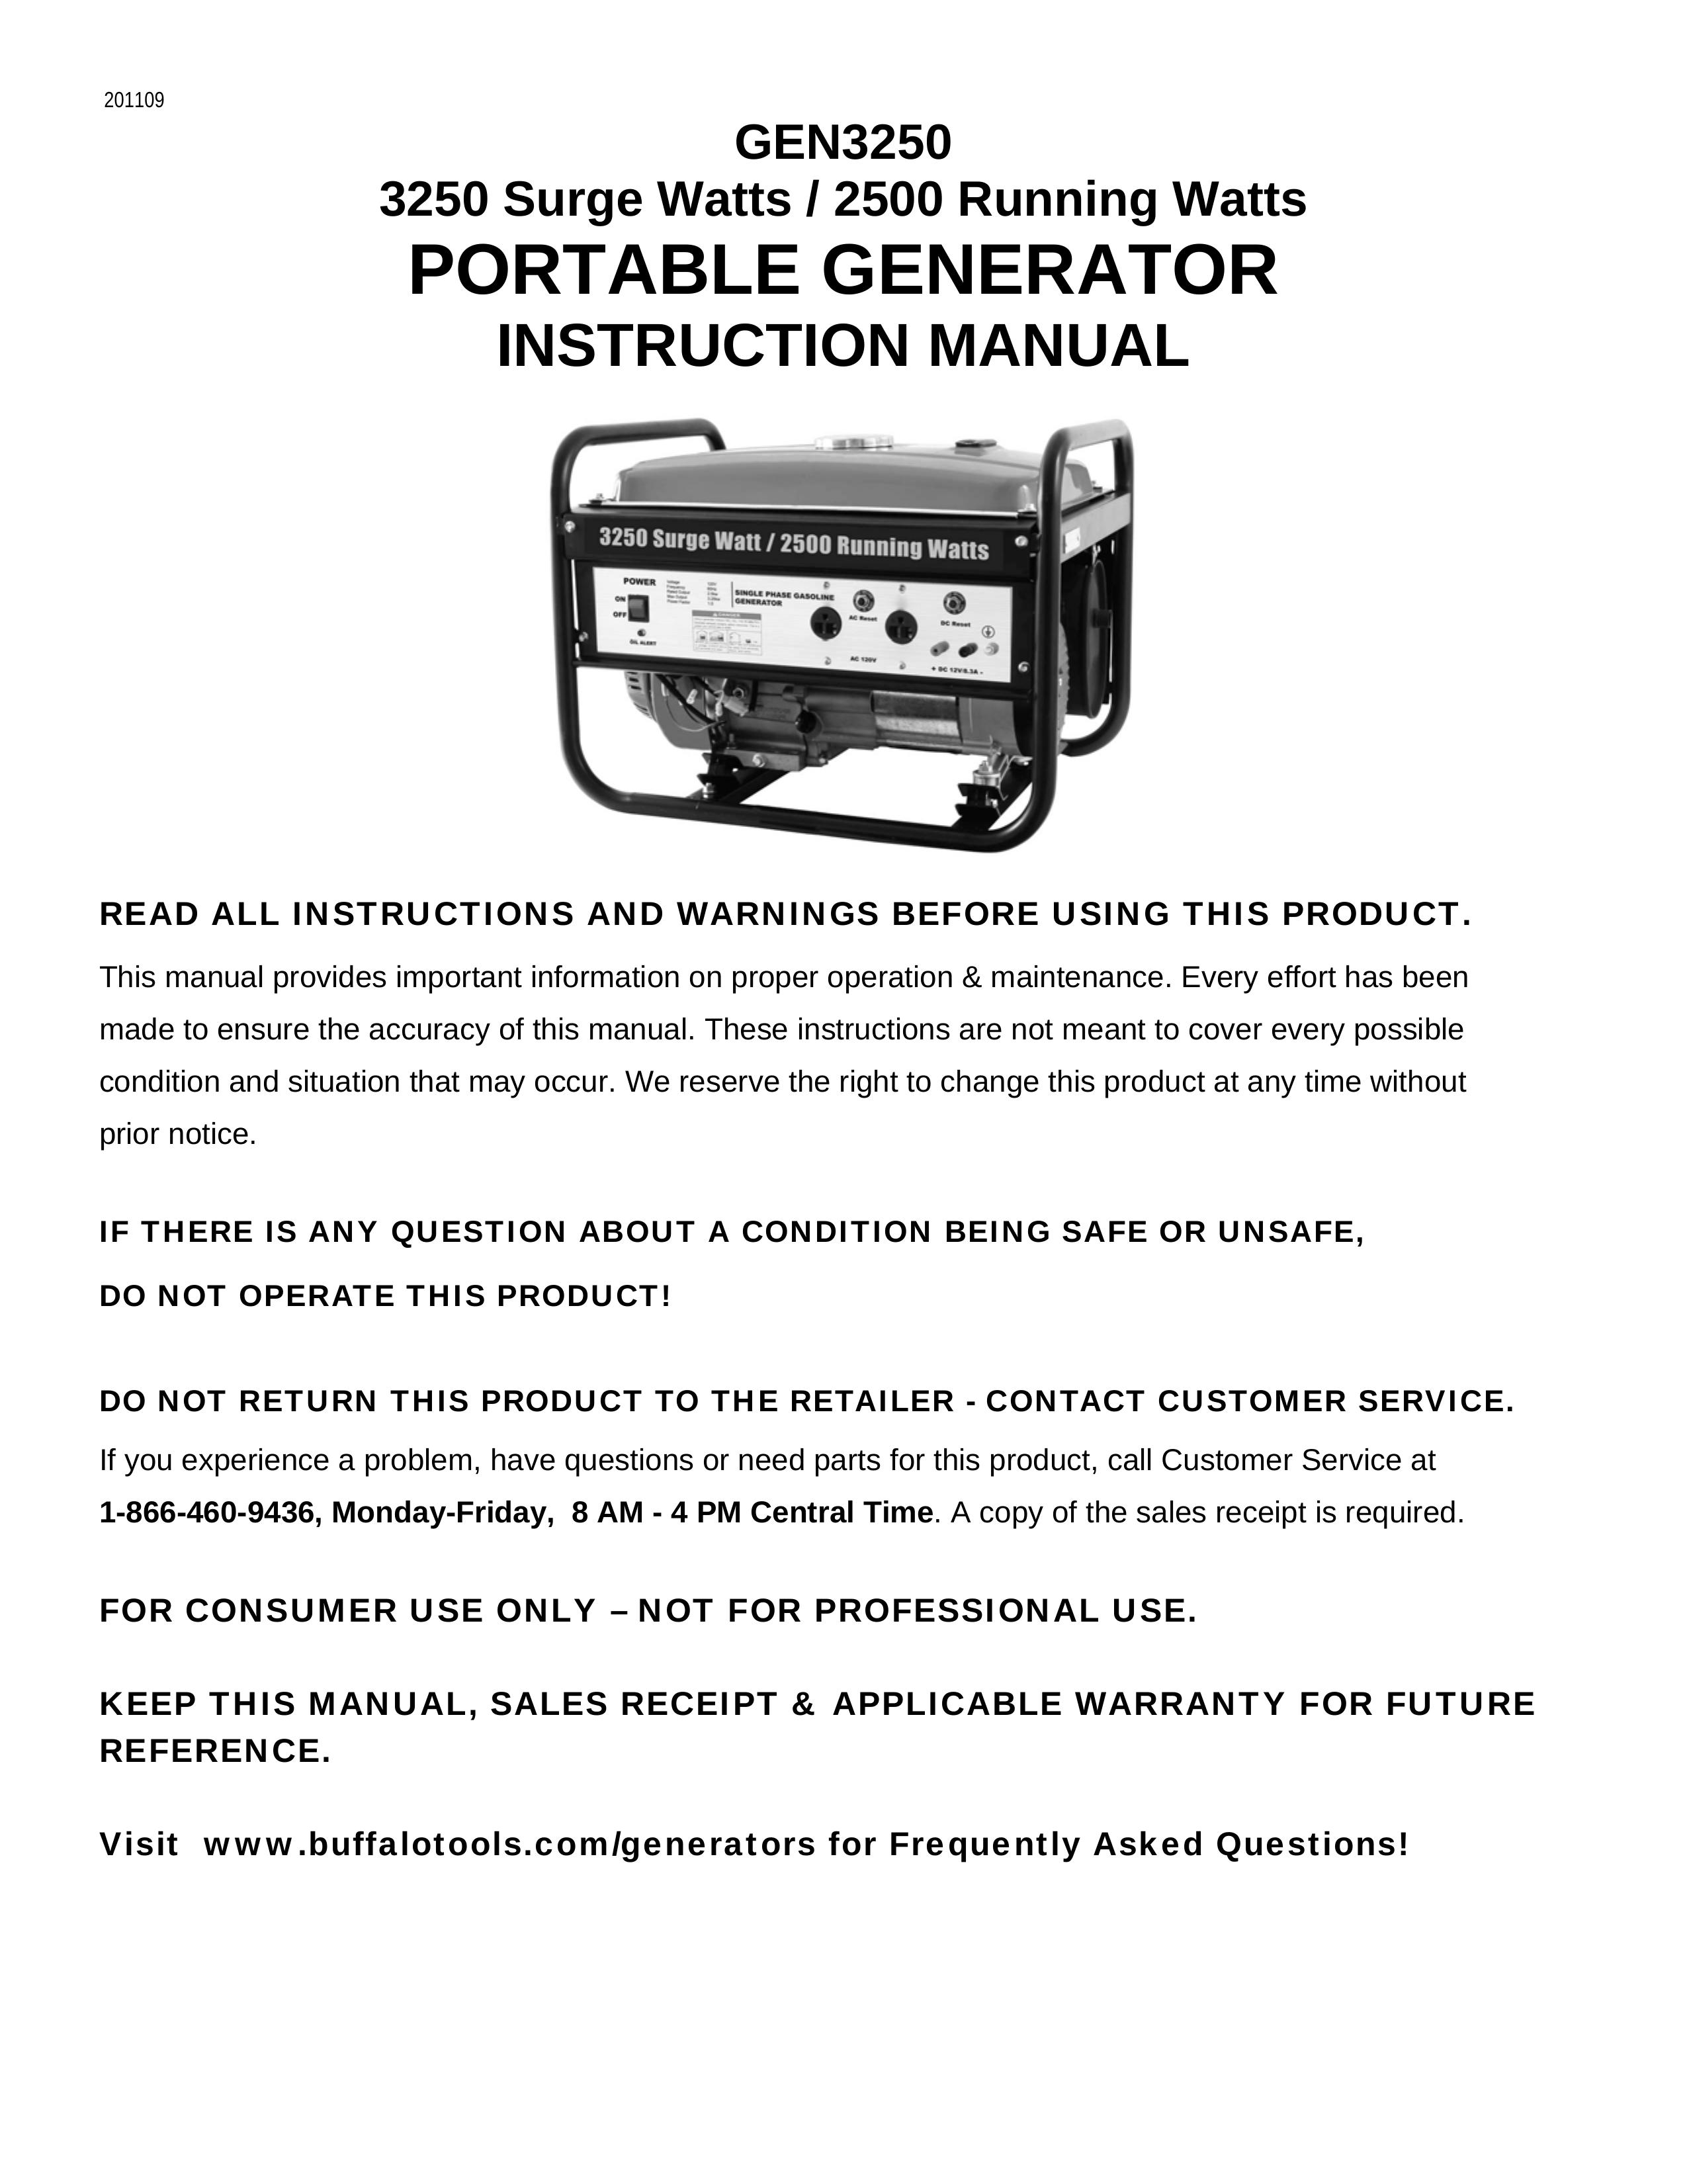 Buffalo Tools GEN3250 Portable Generator User Manual